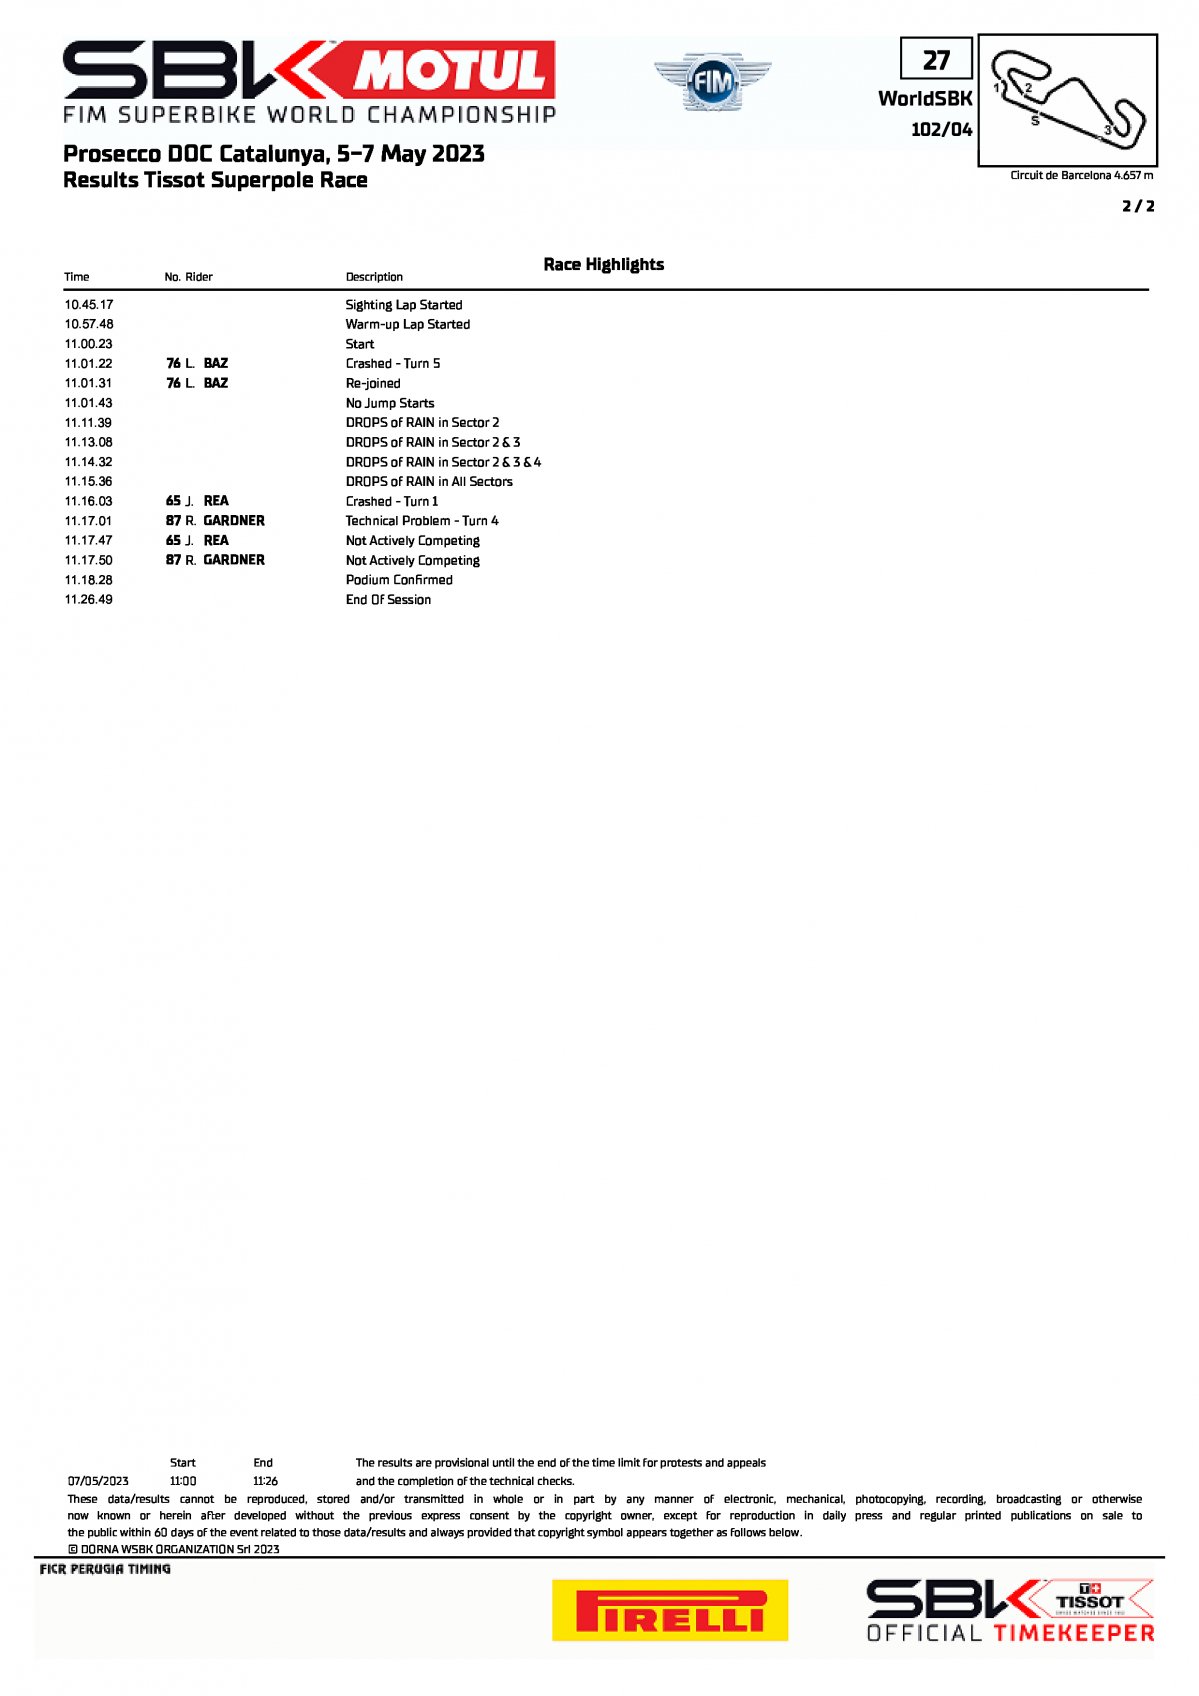 Результаты Superpole Race CATWorldSBK (07/05/2023)